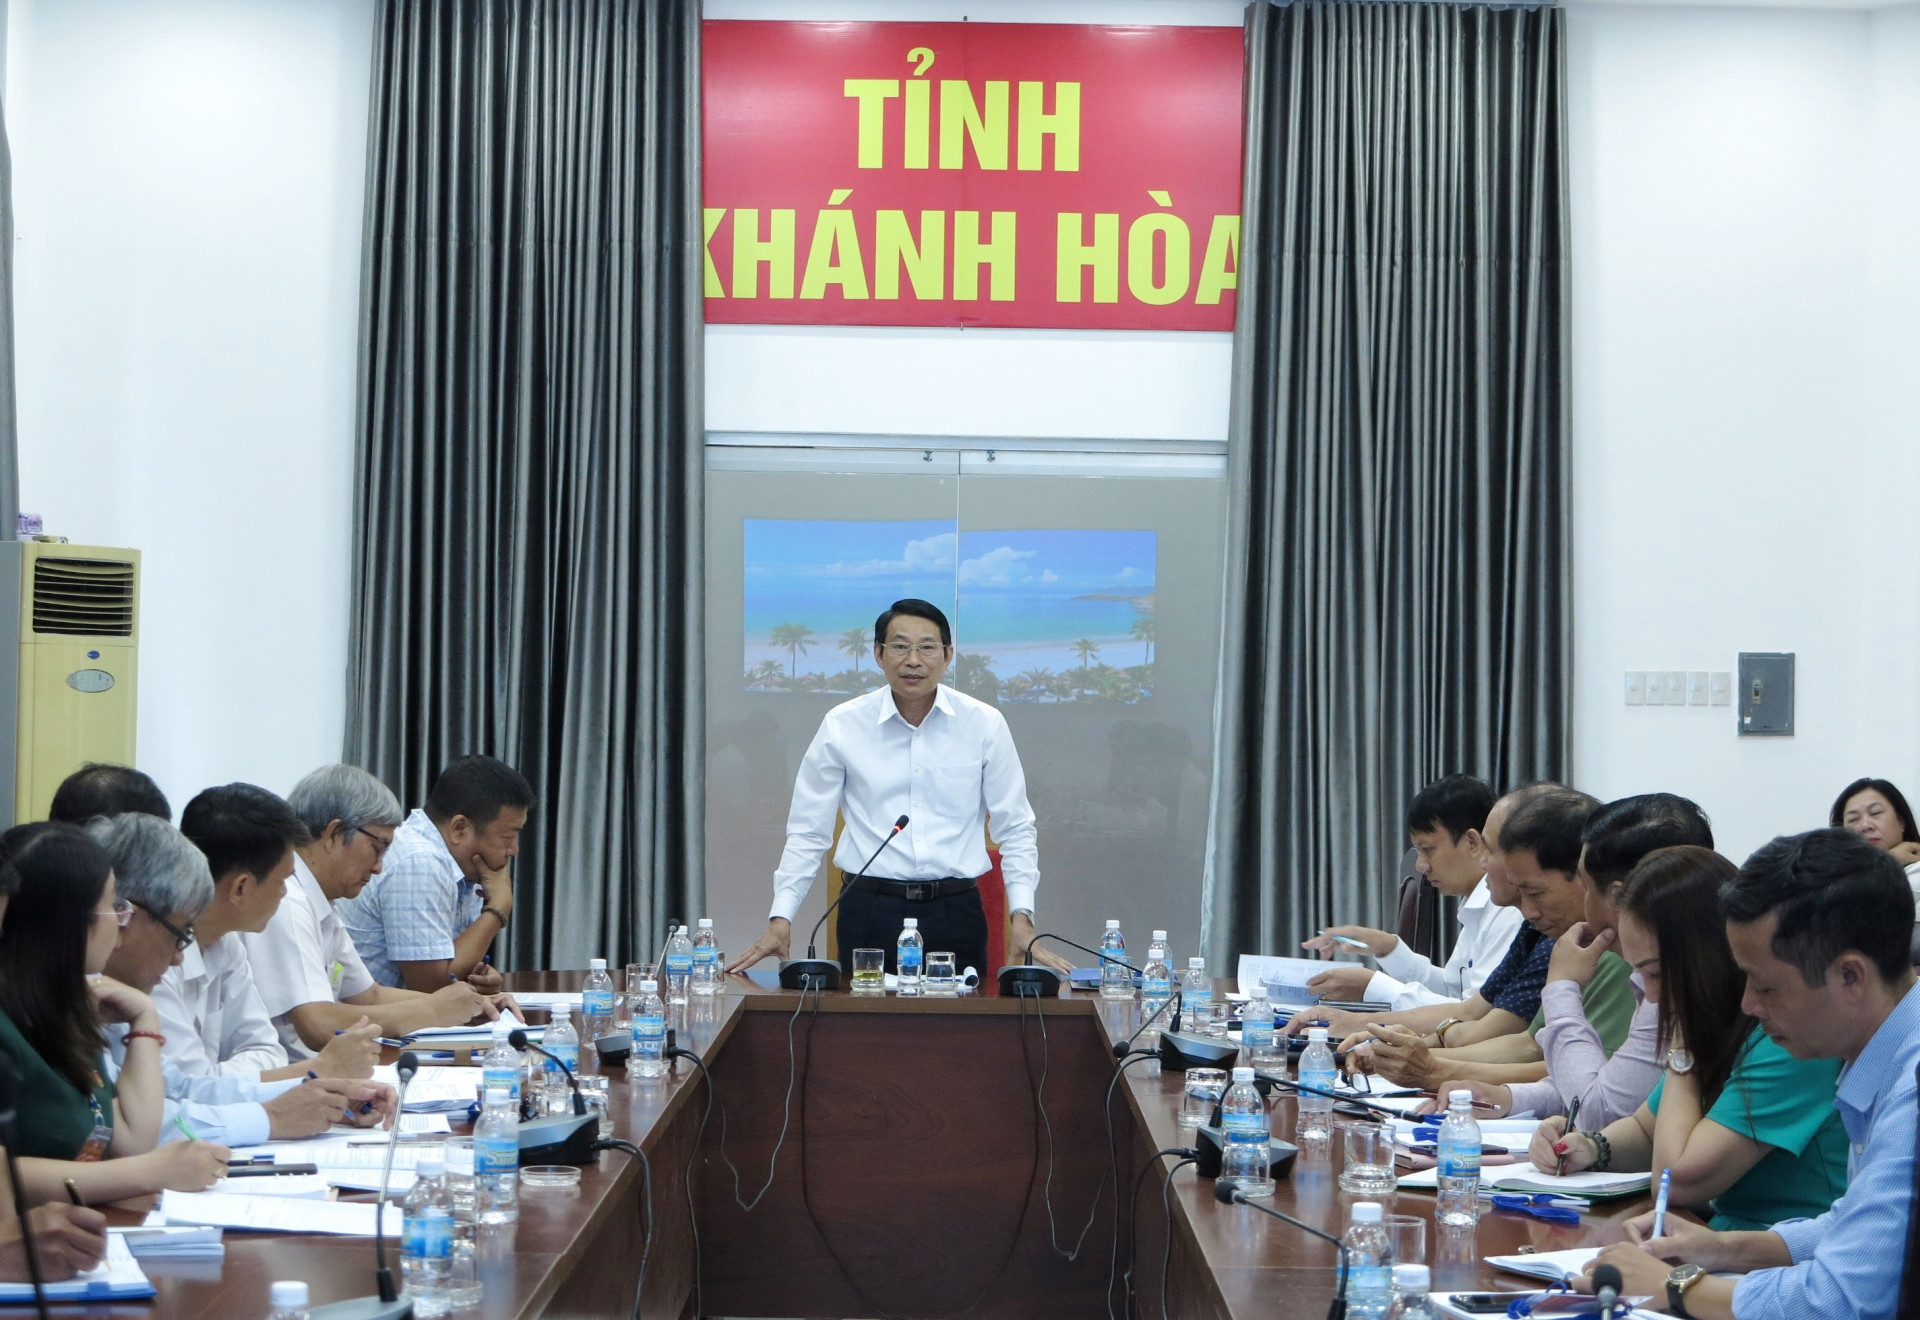 Dinh Van Thieu speaking at the meeting

